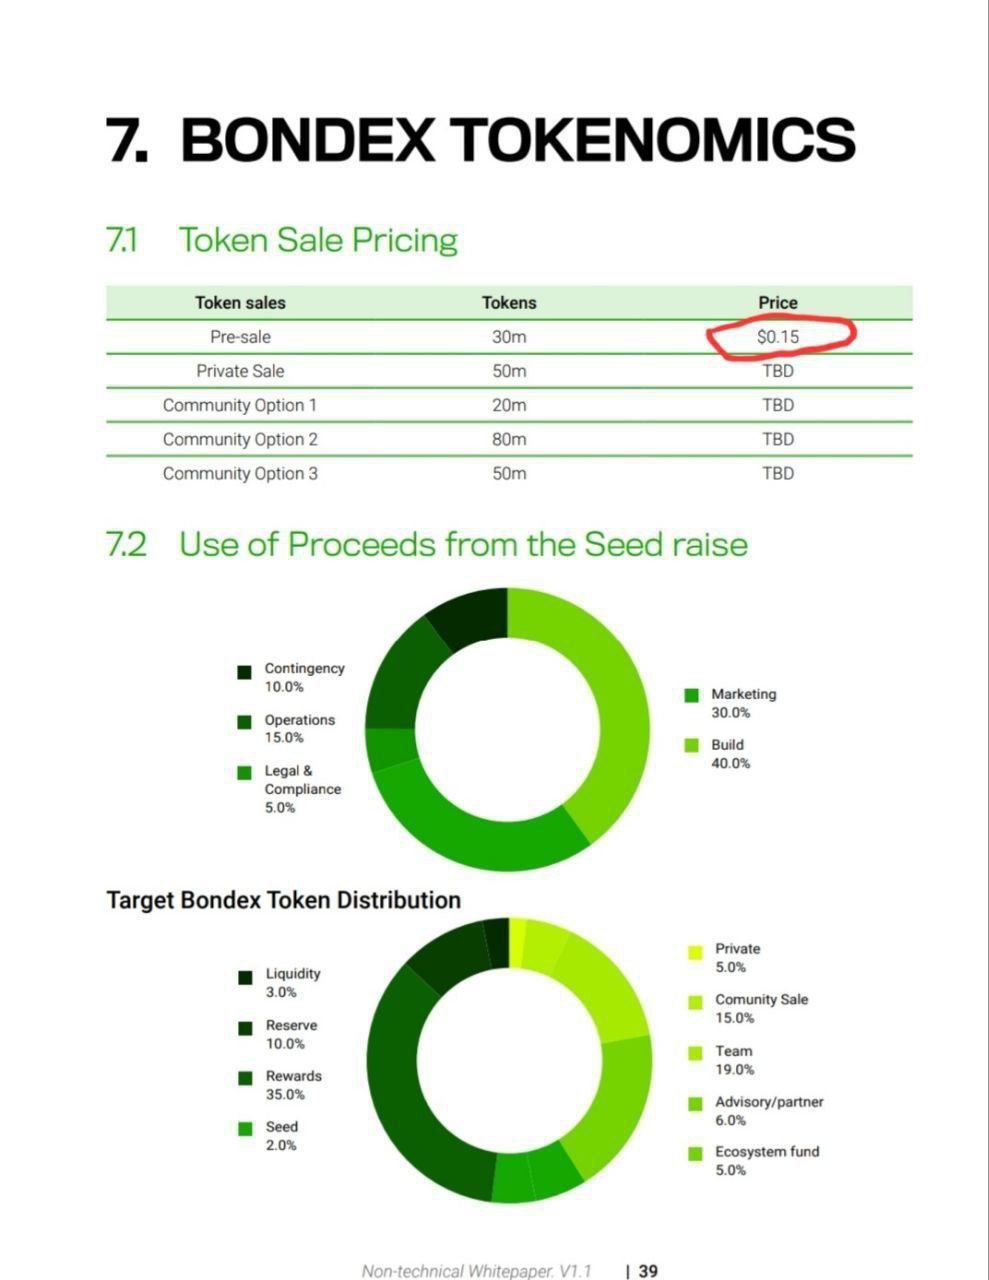 Bondex Airdrop: BNDX Price, Bondex Launch - AIA KART